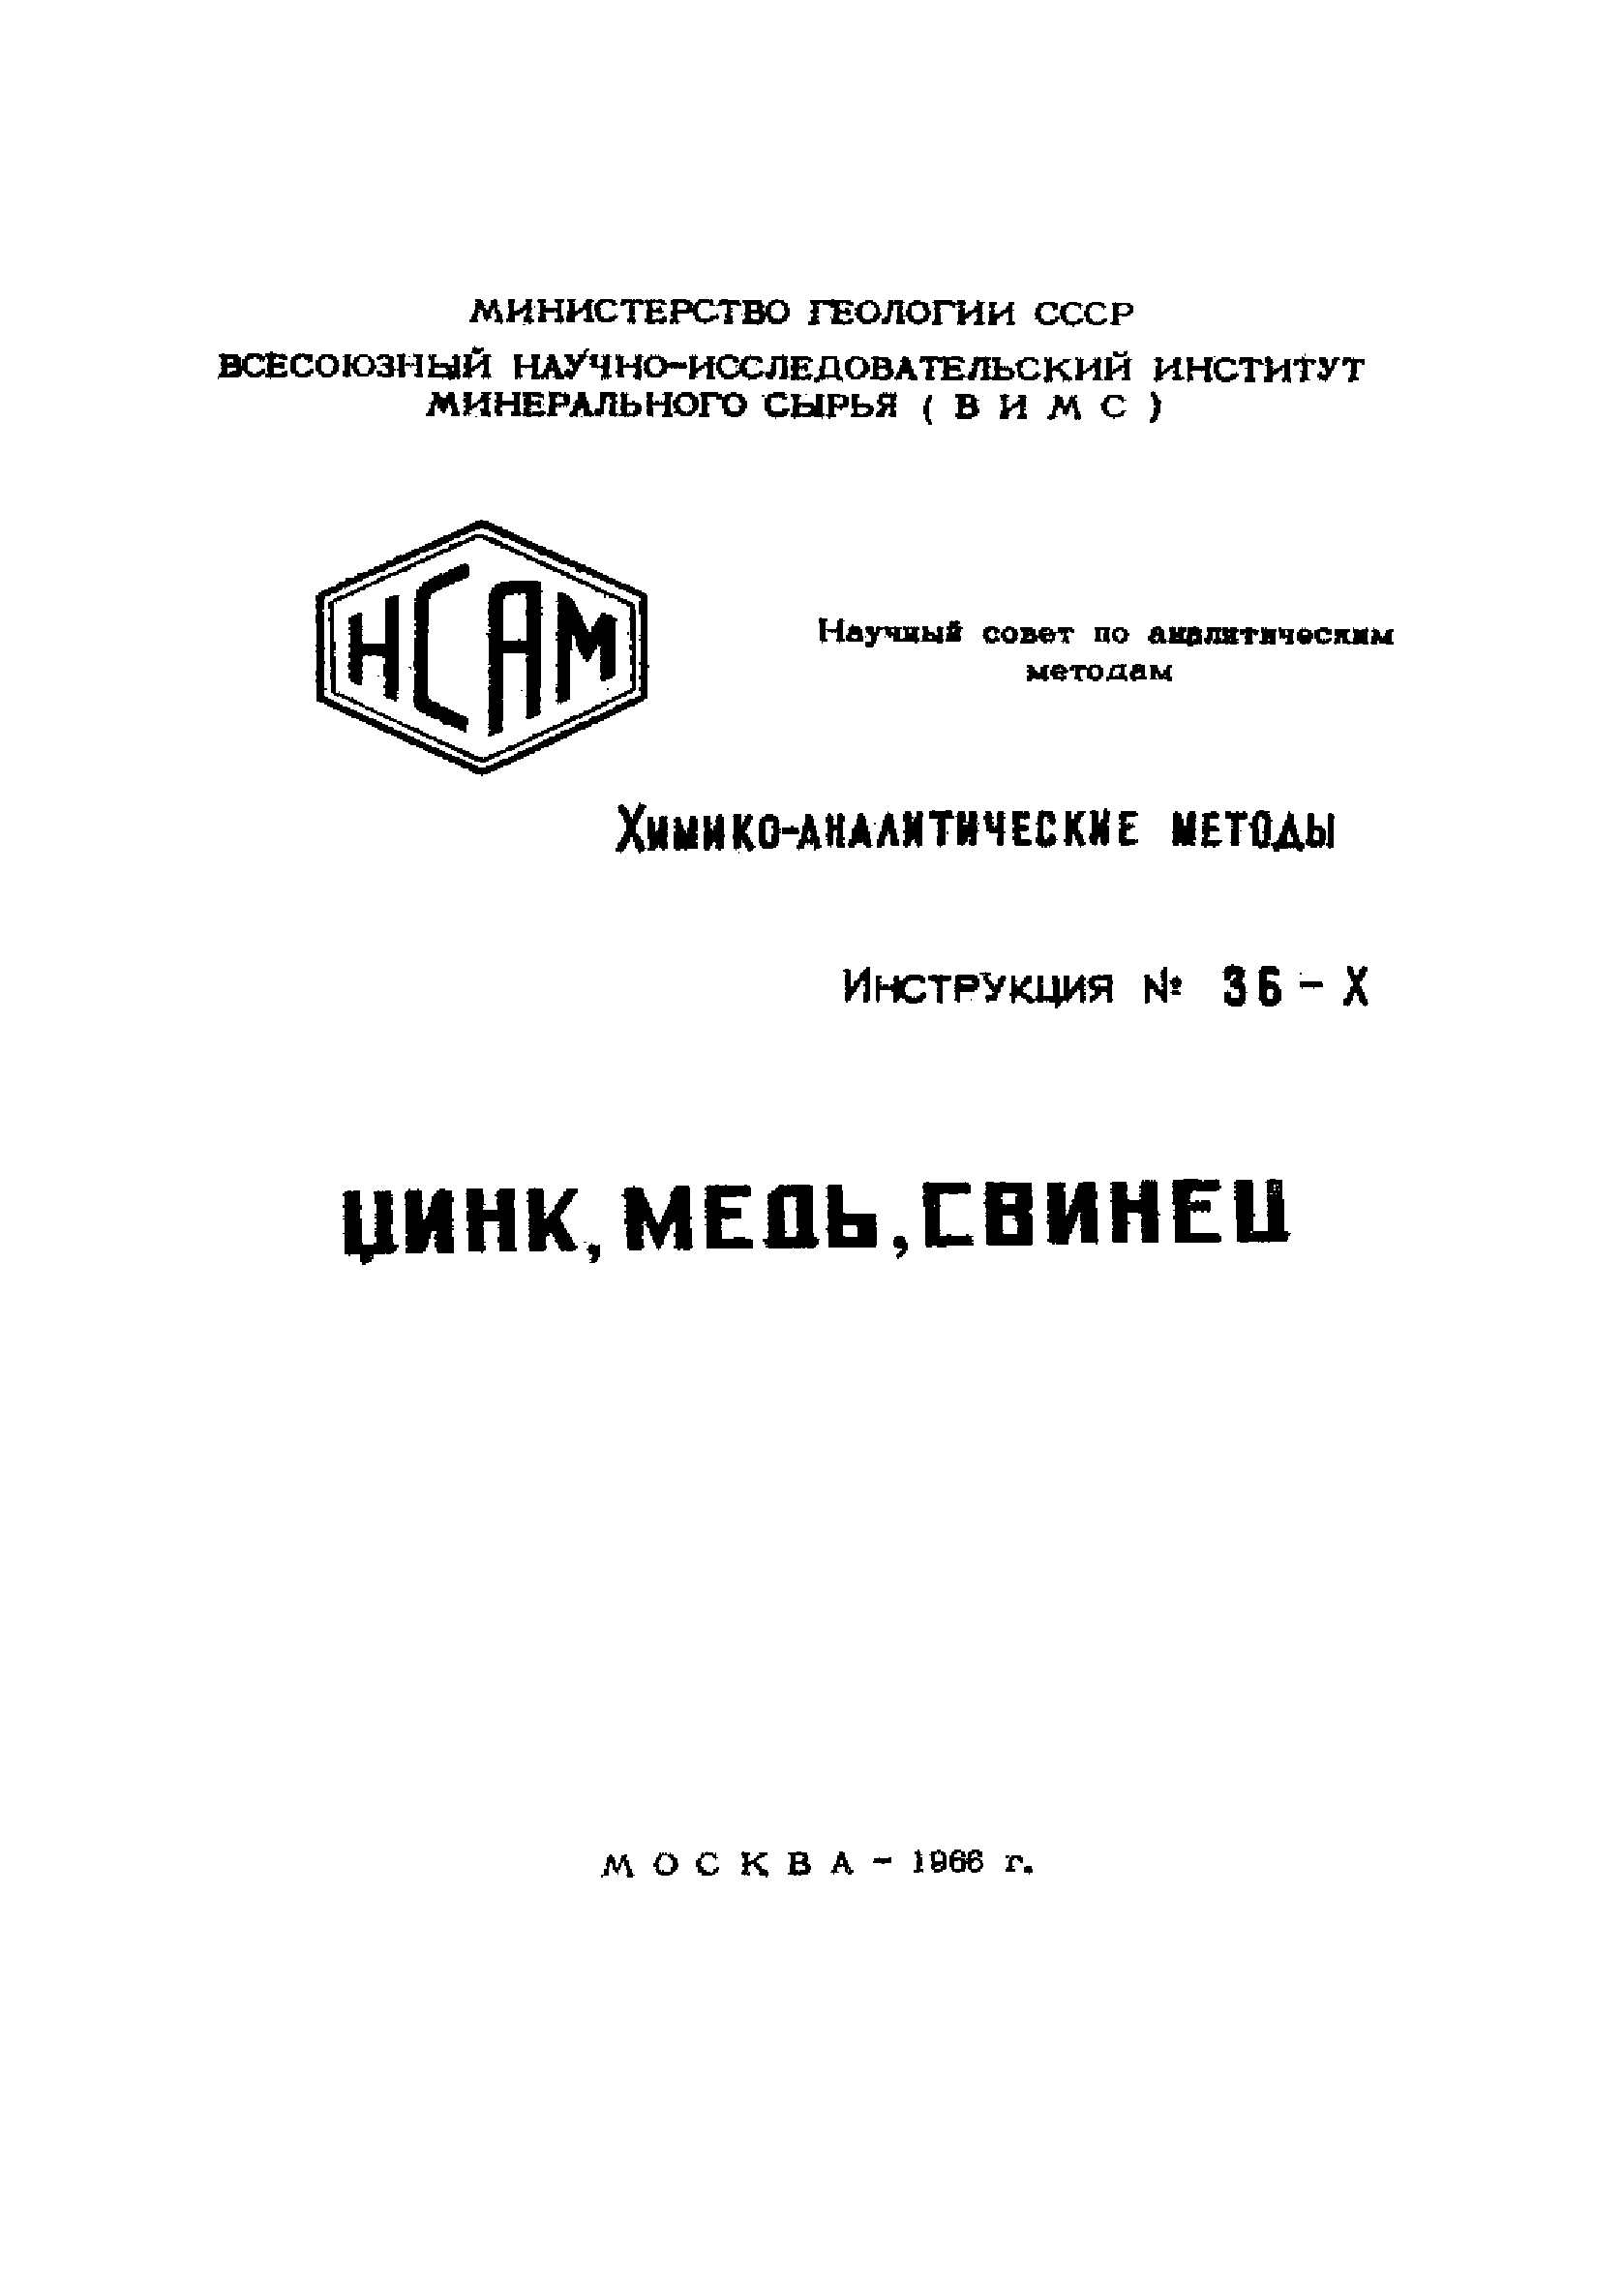 Инструкция НСАМ 36-Х